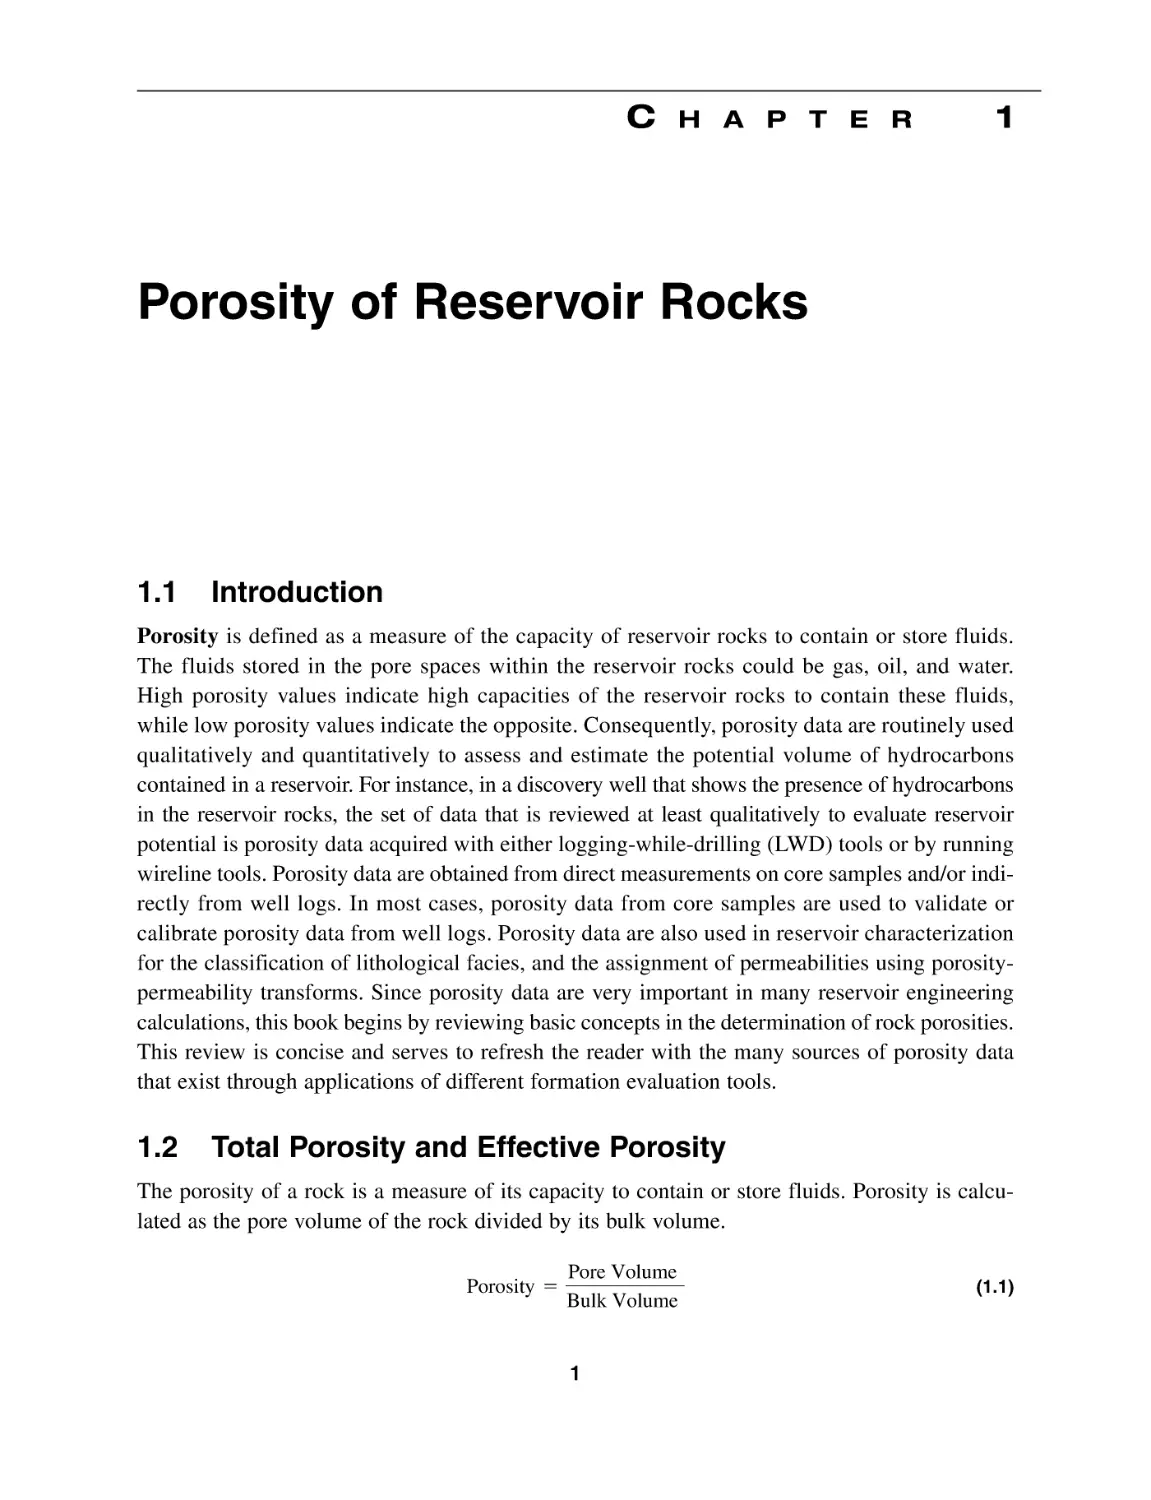 Chapter 1 Porosity of Reservoir Rocks
1.1 Introduction
1.2 Total Porosity and Effective Porosity